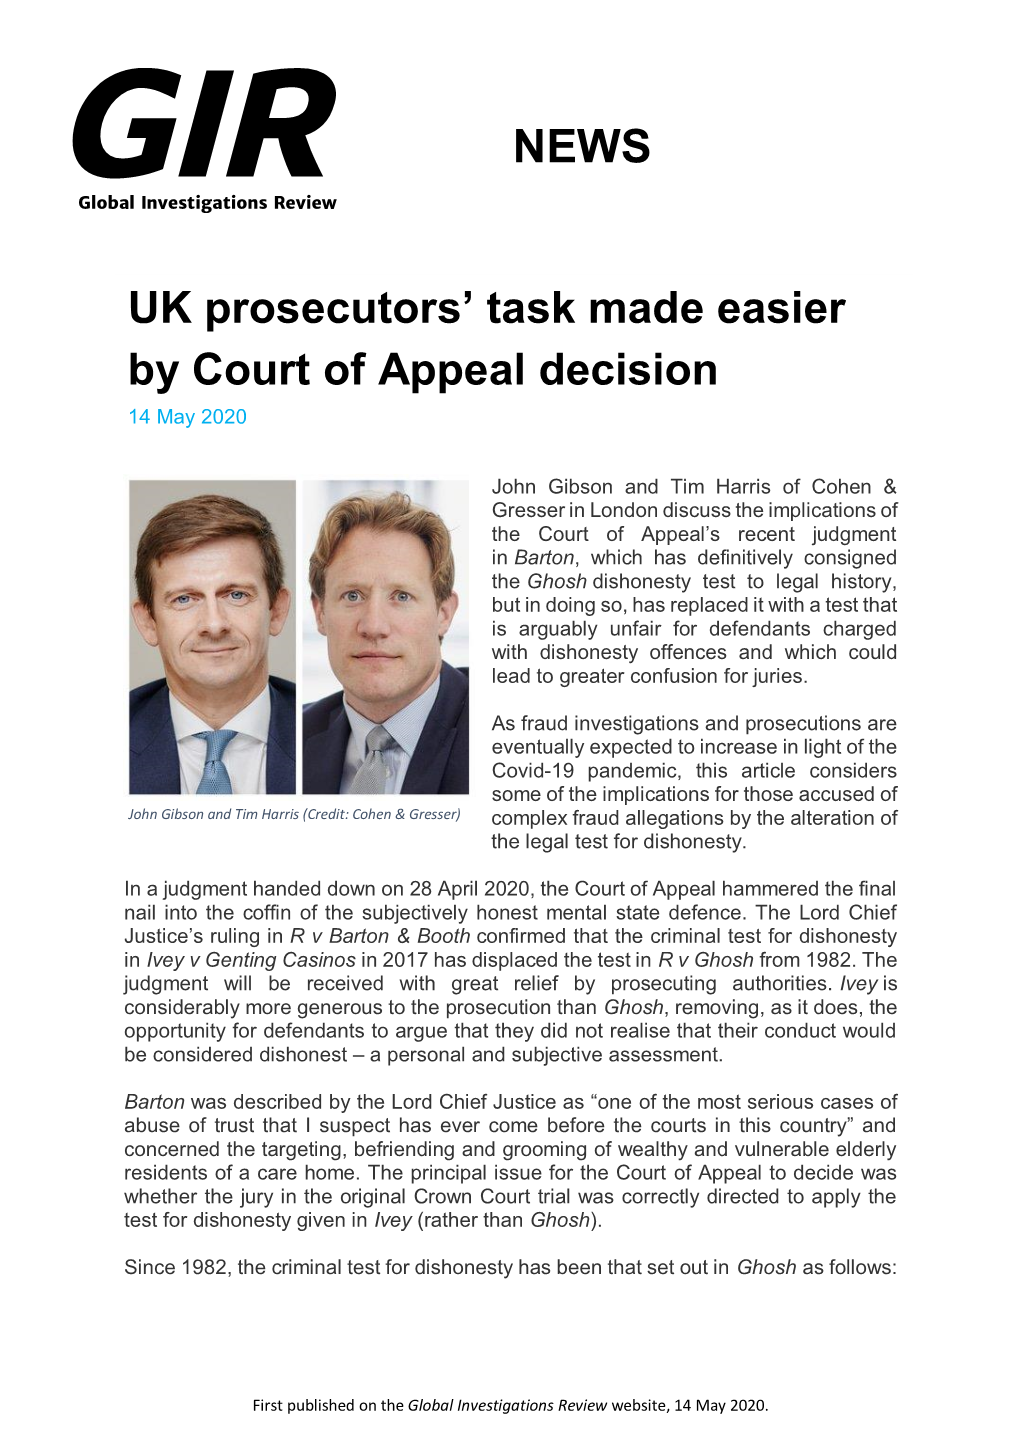 UK Prosecutors' Task Made Easier by Court Of